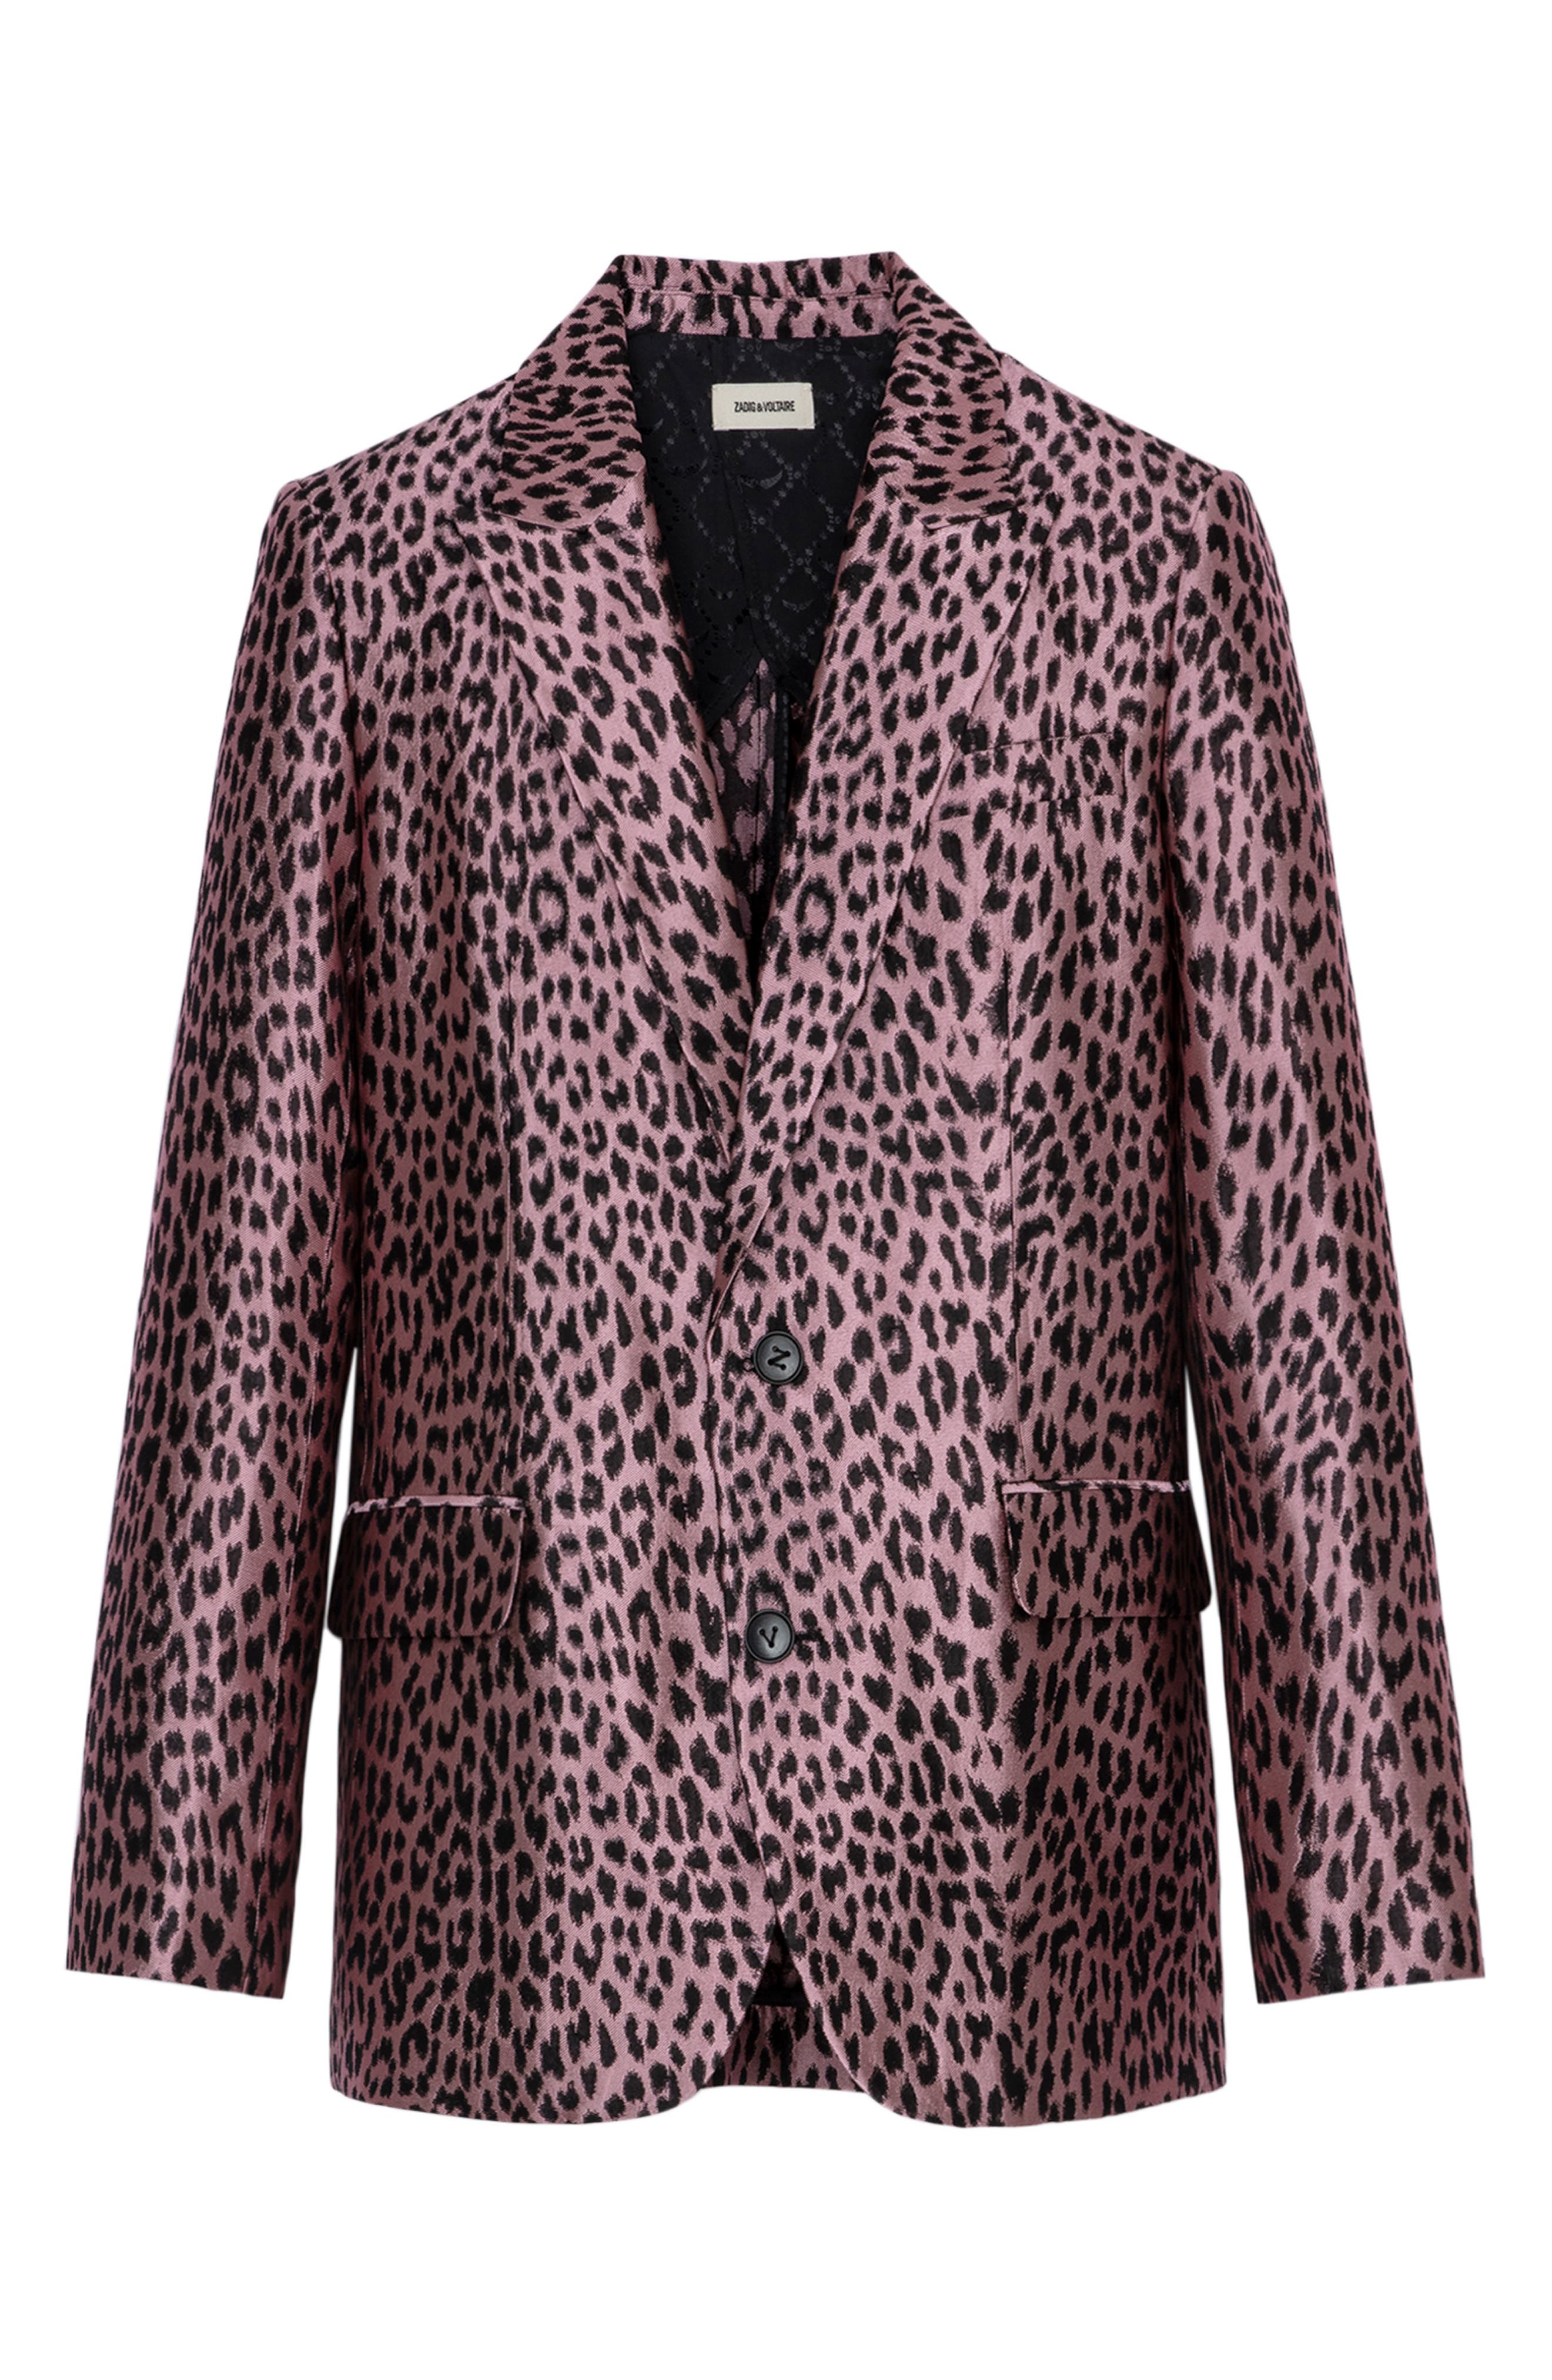 Zadig & Voltaire Leopard Jacquard Blazer in Rose